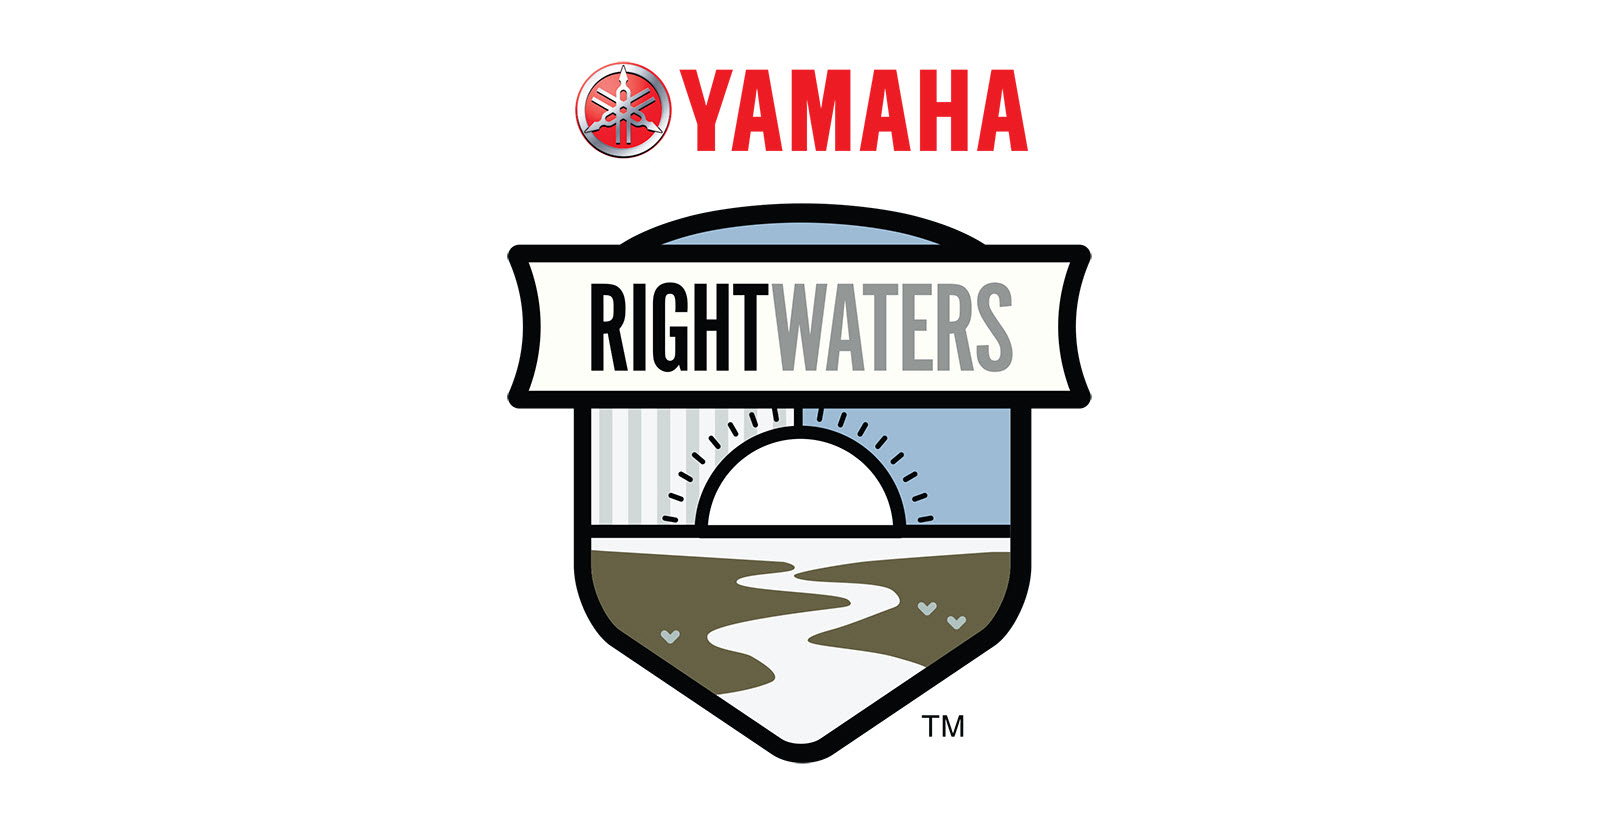 Yamaha Rightwaters logo